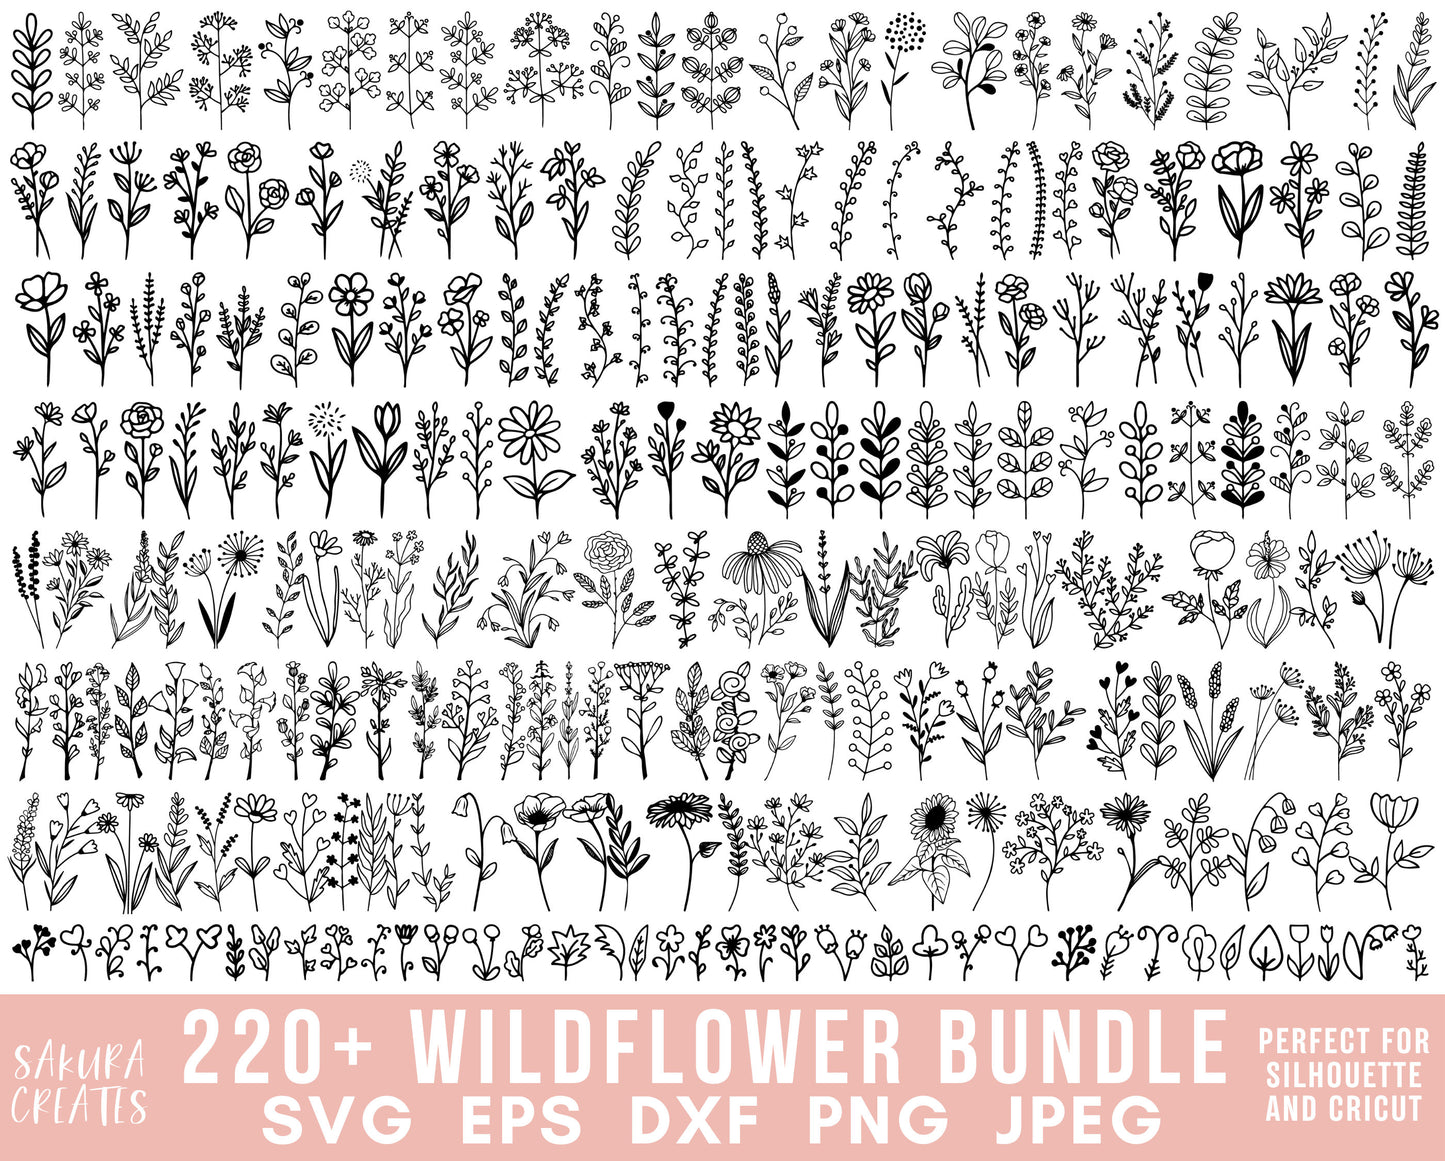 220+ Wildflower SVG Bundle Wildflower Vector Wildflower Silhouette Wildflower Clipart Wildflower Cut file Birth flowers SVG files for cricut